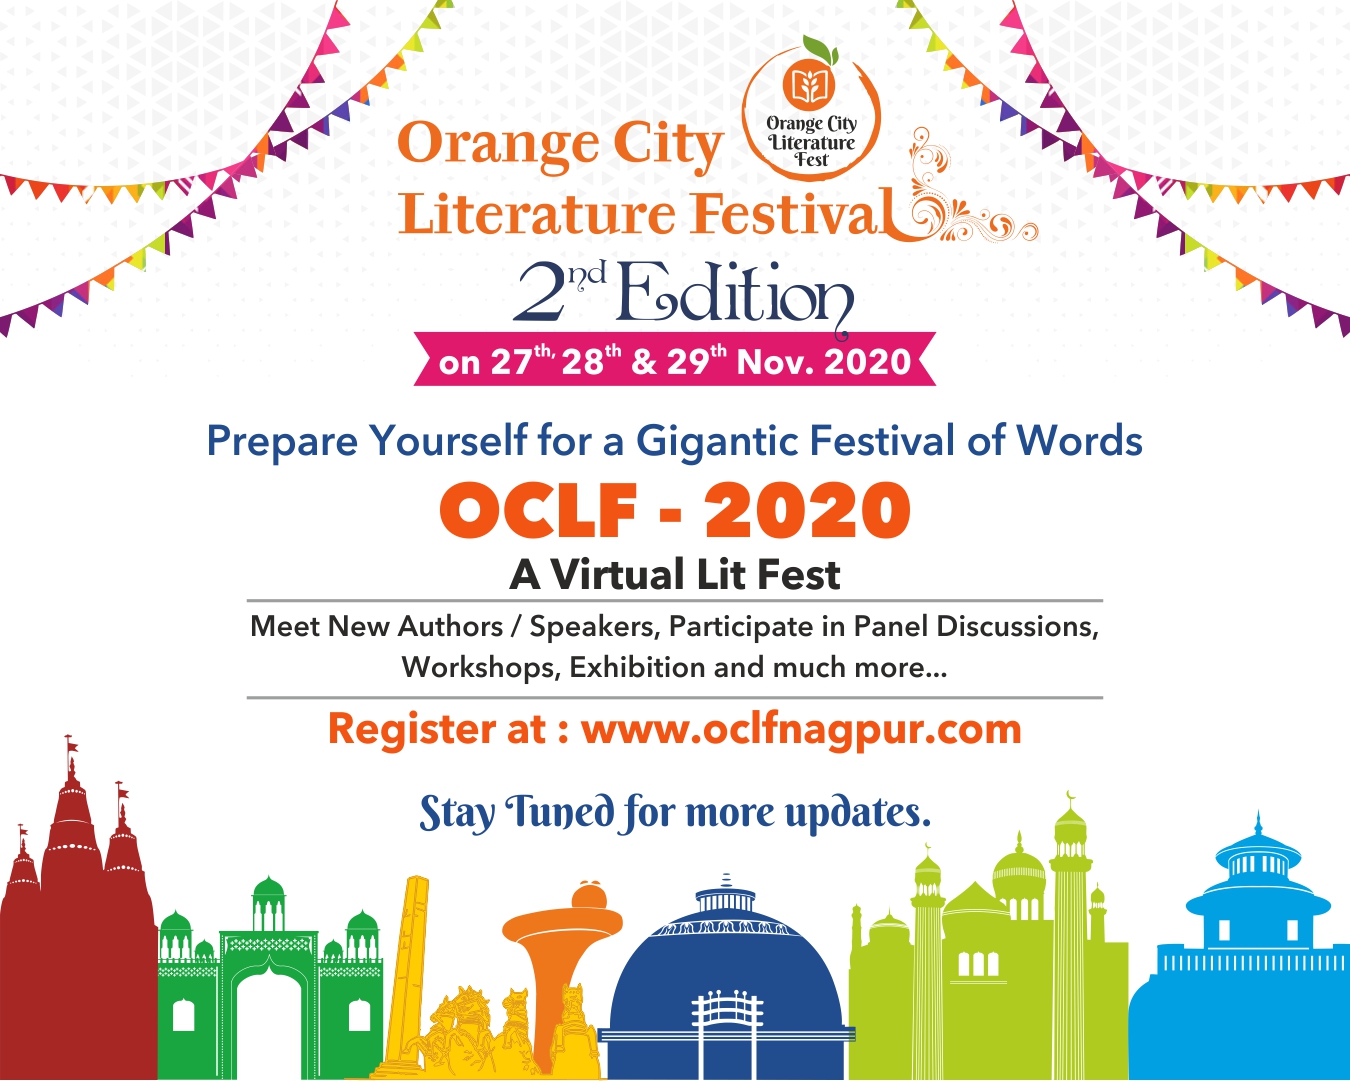 Orange City Literature Festival 2nd Edition, Nagpur, Maharashtra, India